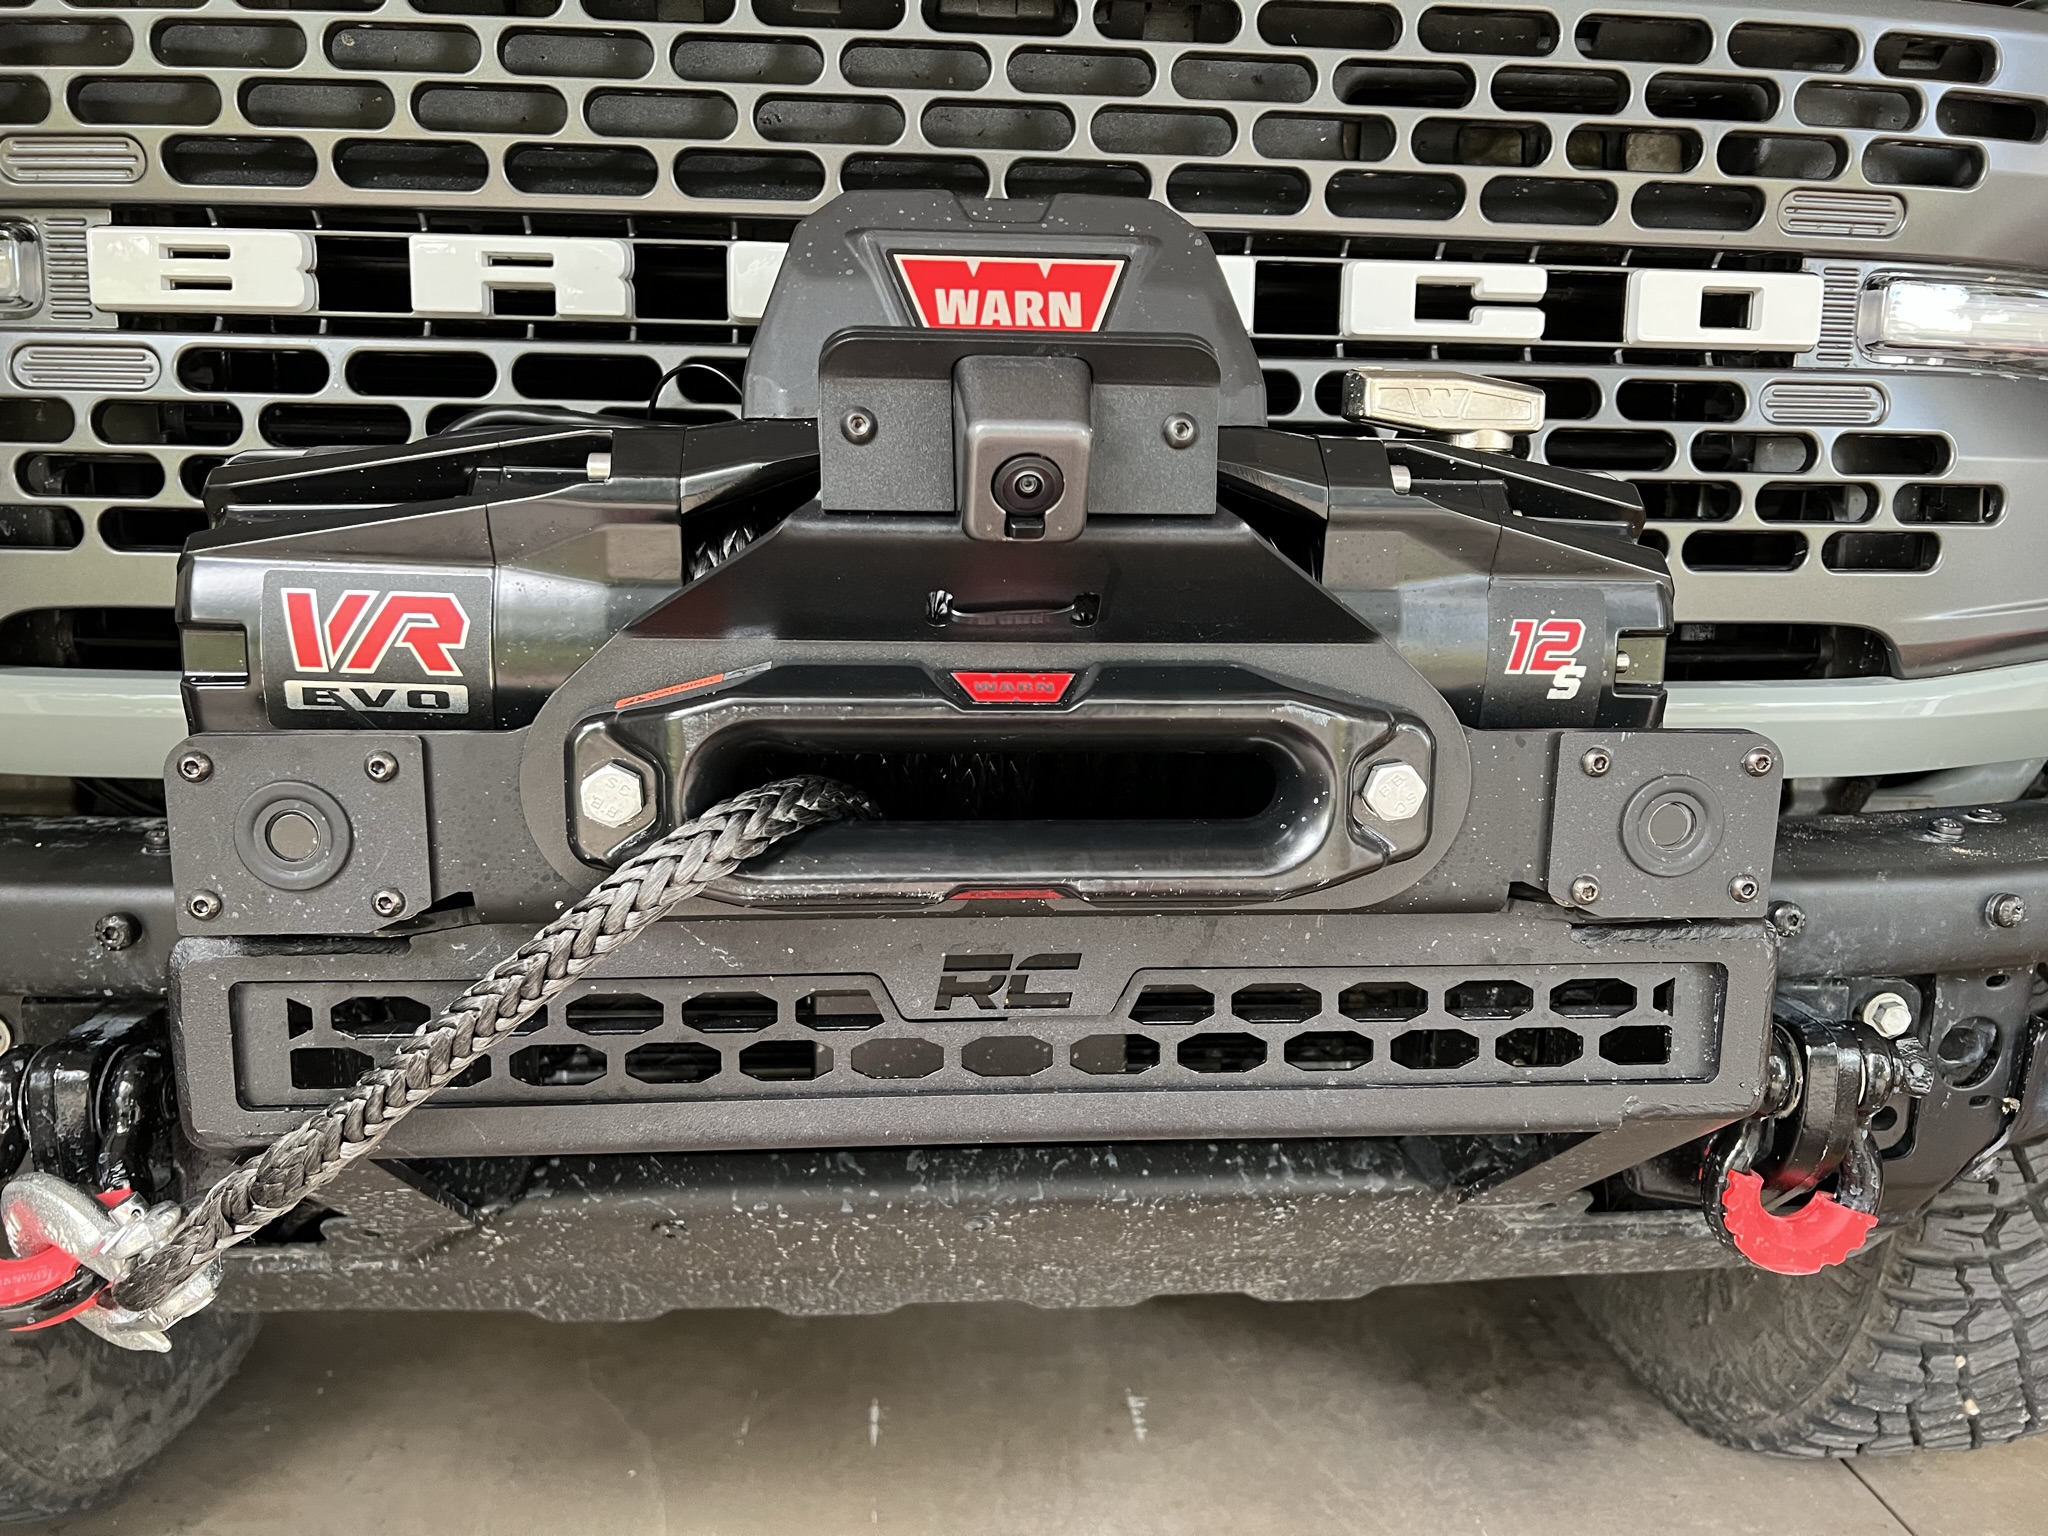 Ford Bronco Warn VR EVO 12S Remote not functioning ED996FD6-9CF4-4403-9094-E91446EC7DE7